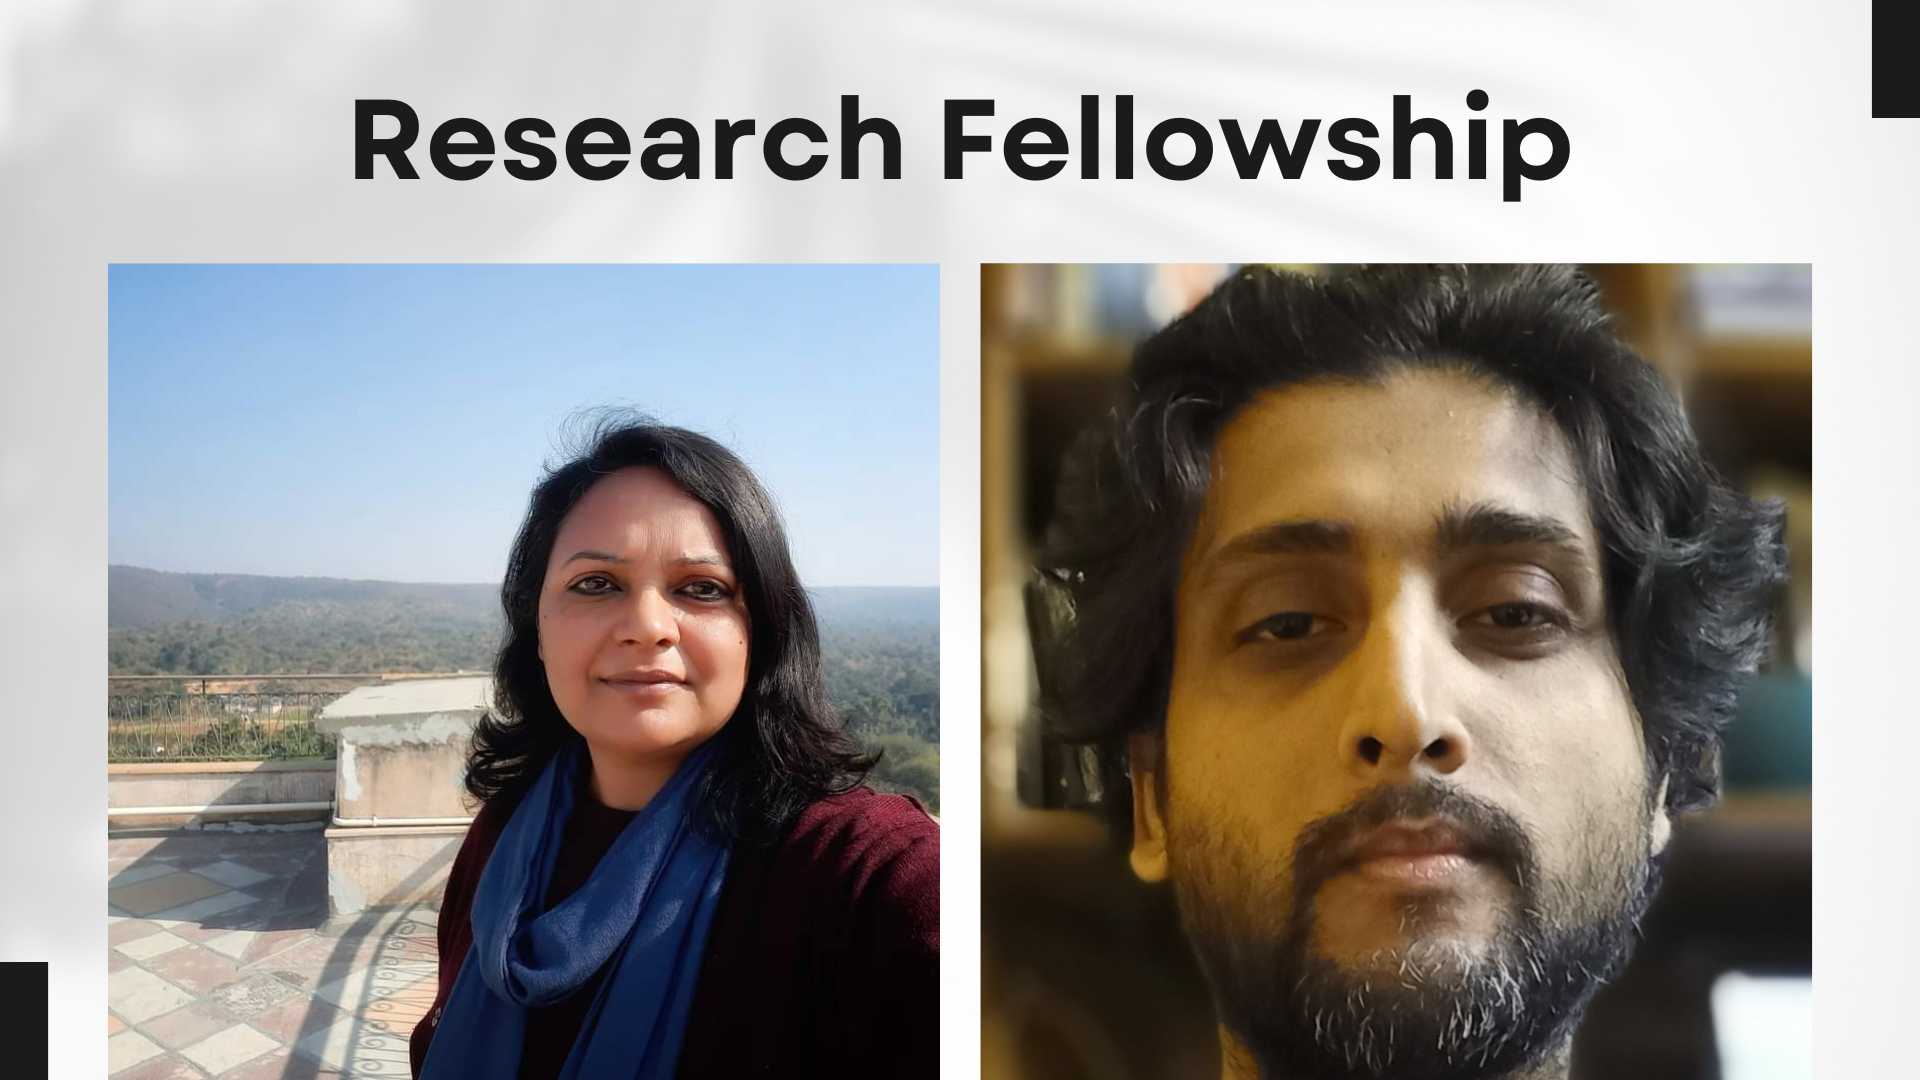 Research Fellows